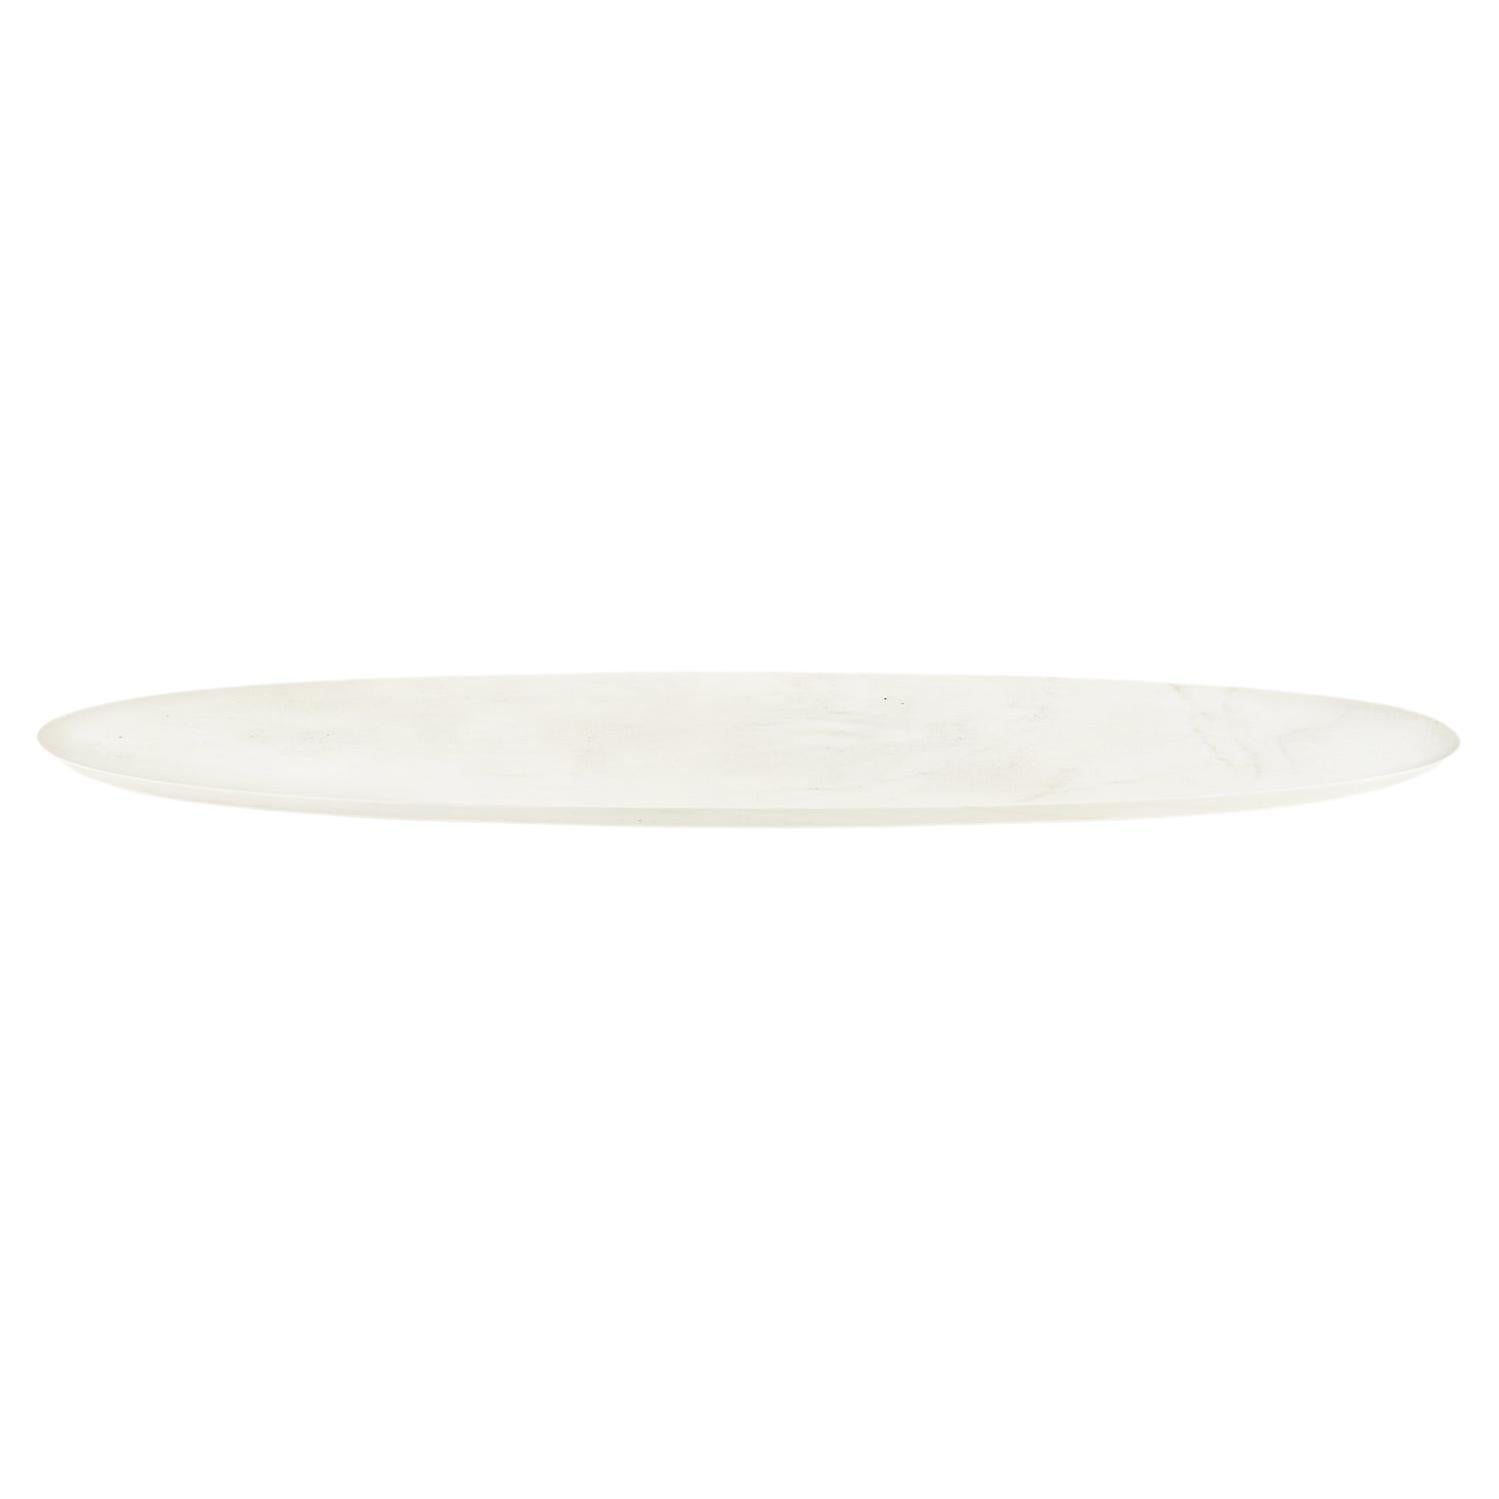 Contemporary Cremo Delicato Marble Sepia Trey by Homefolks For Sale